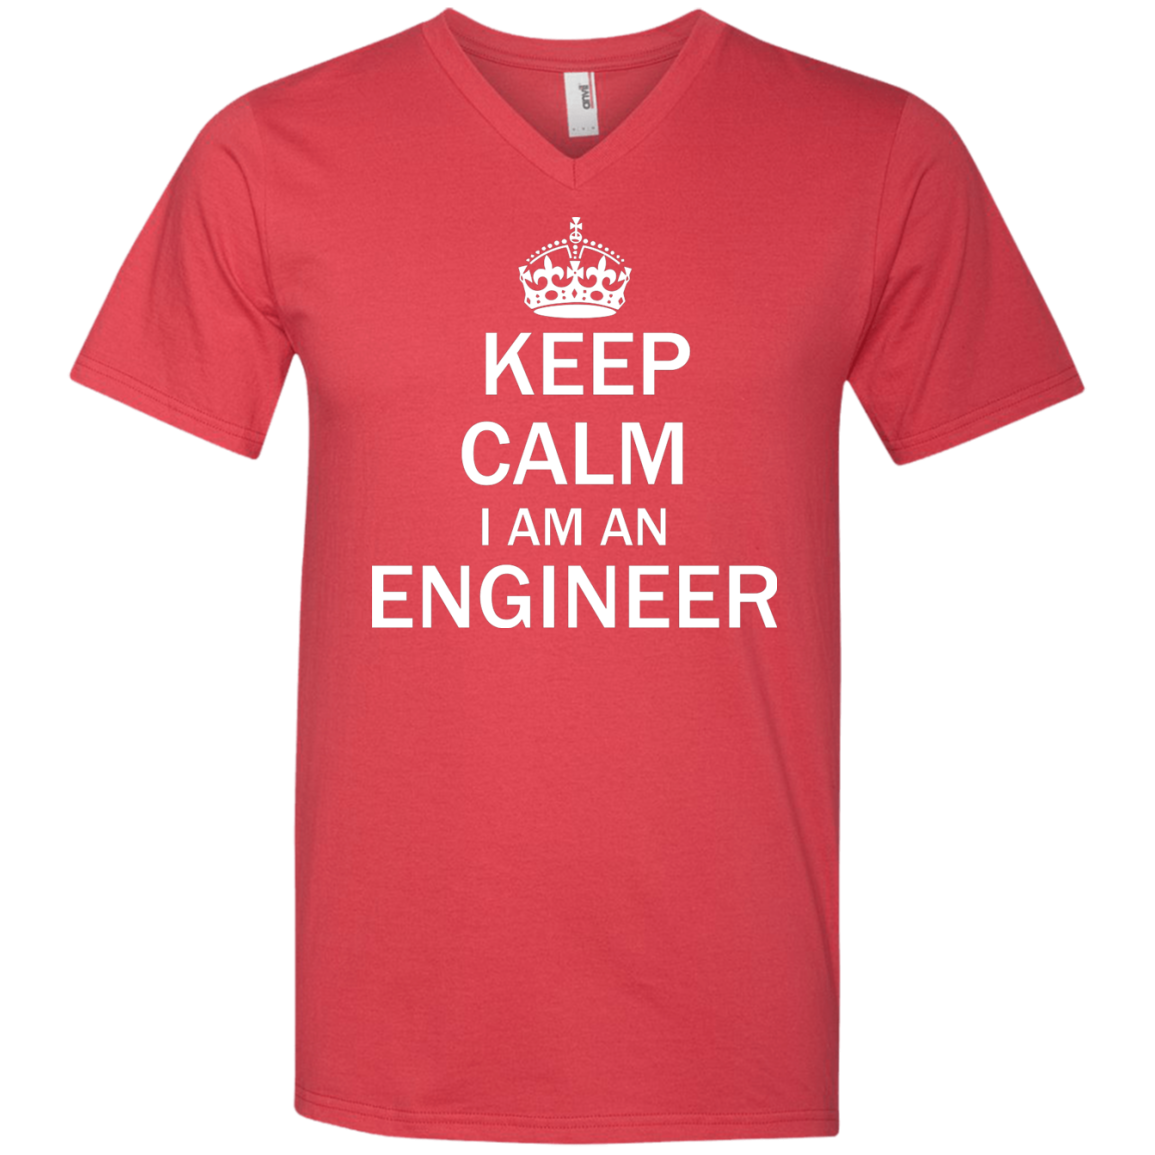 Mantenga la calma: soy ingeniero